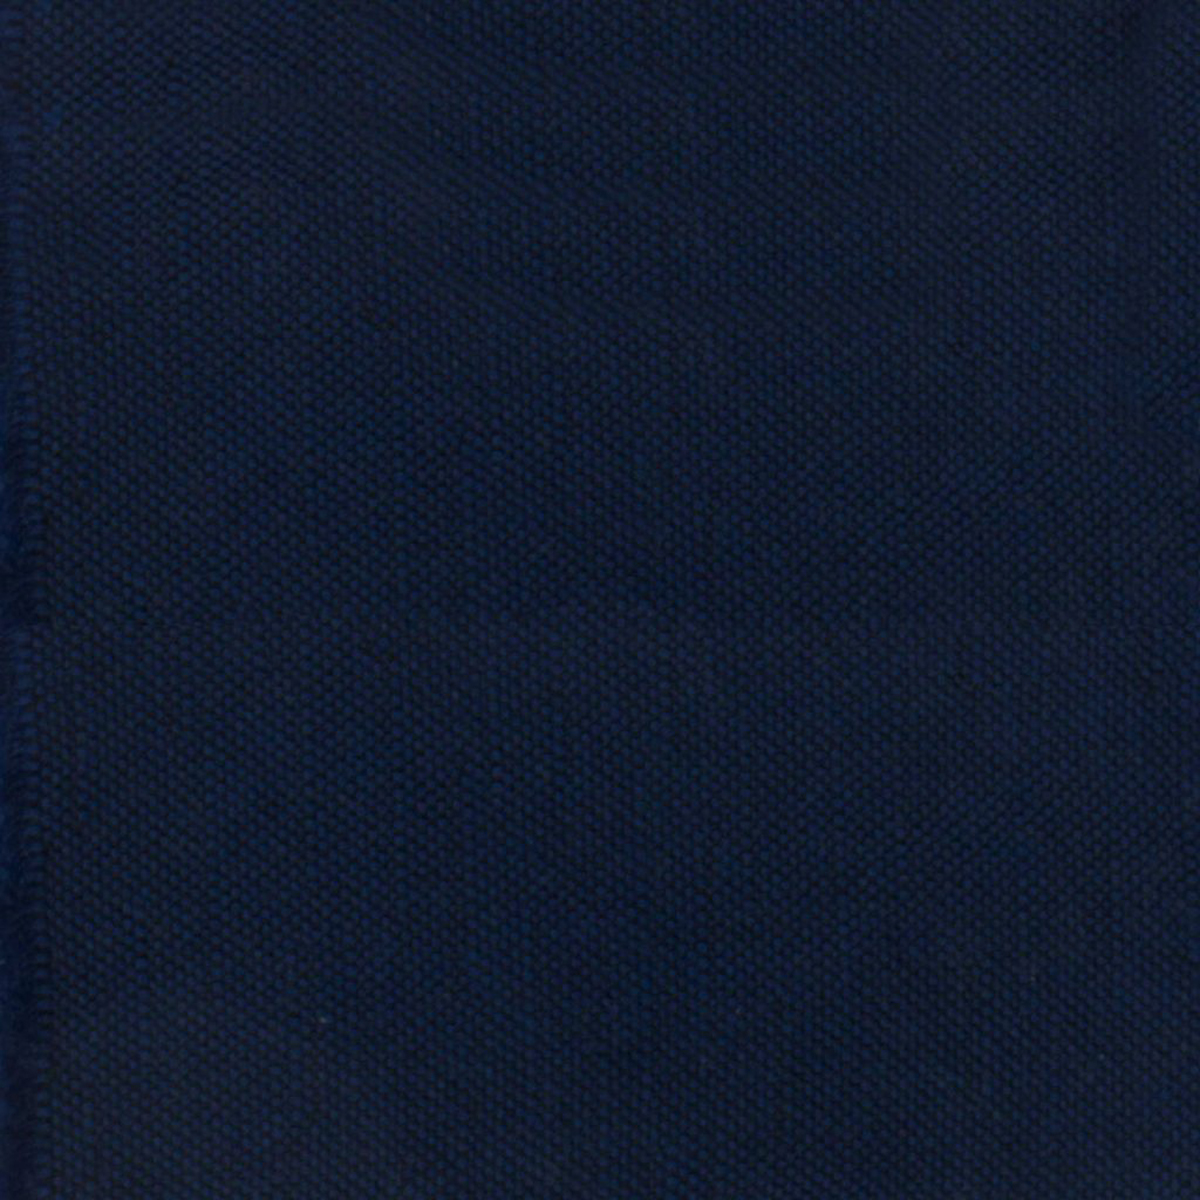 linen indigo cushion for croquet teak arm chair product image